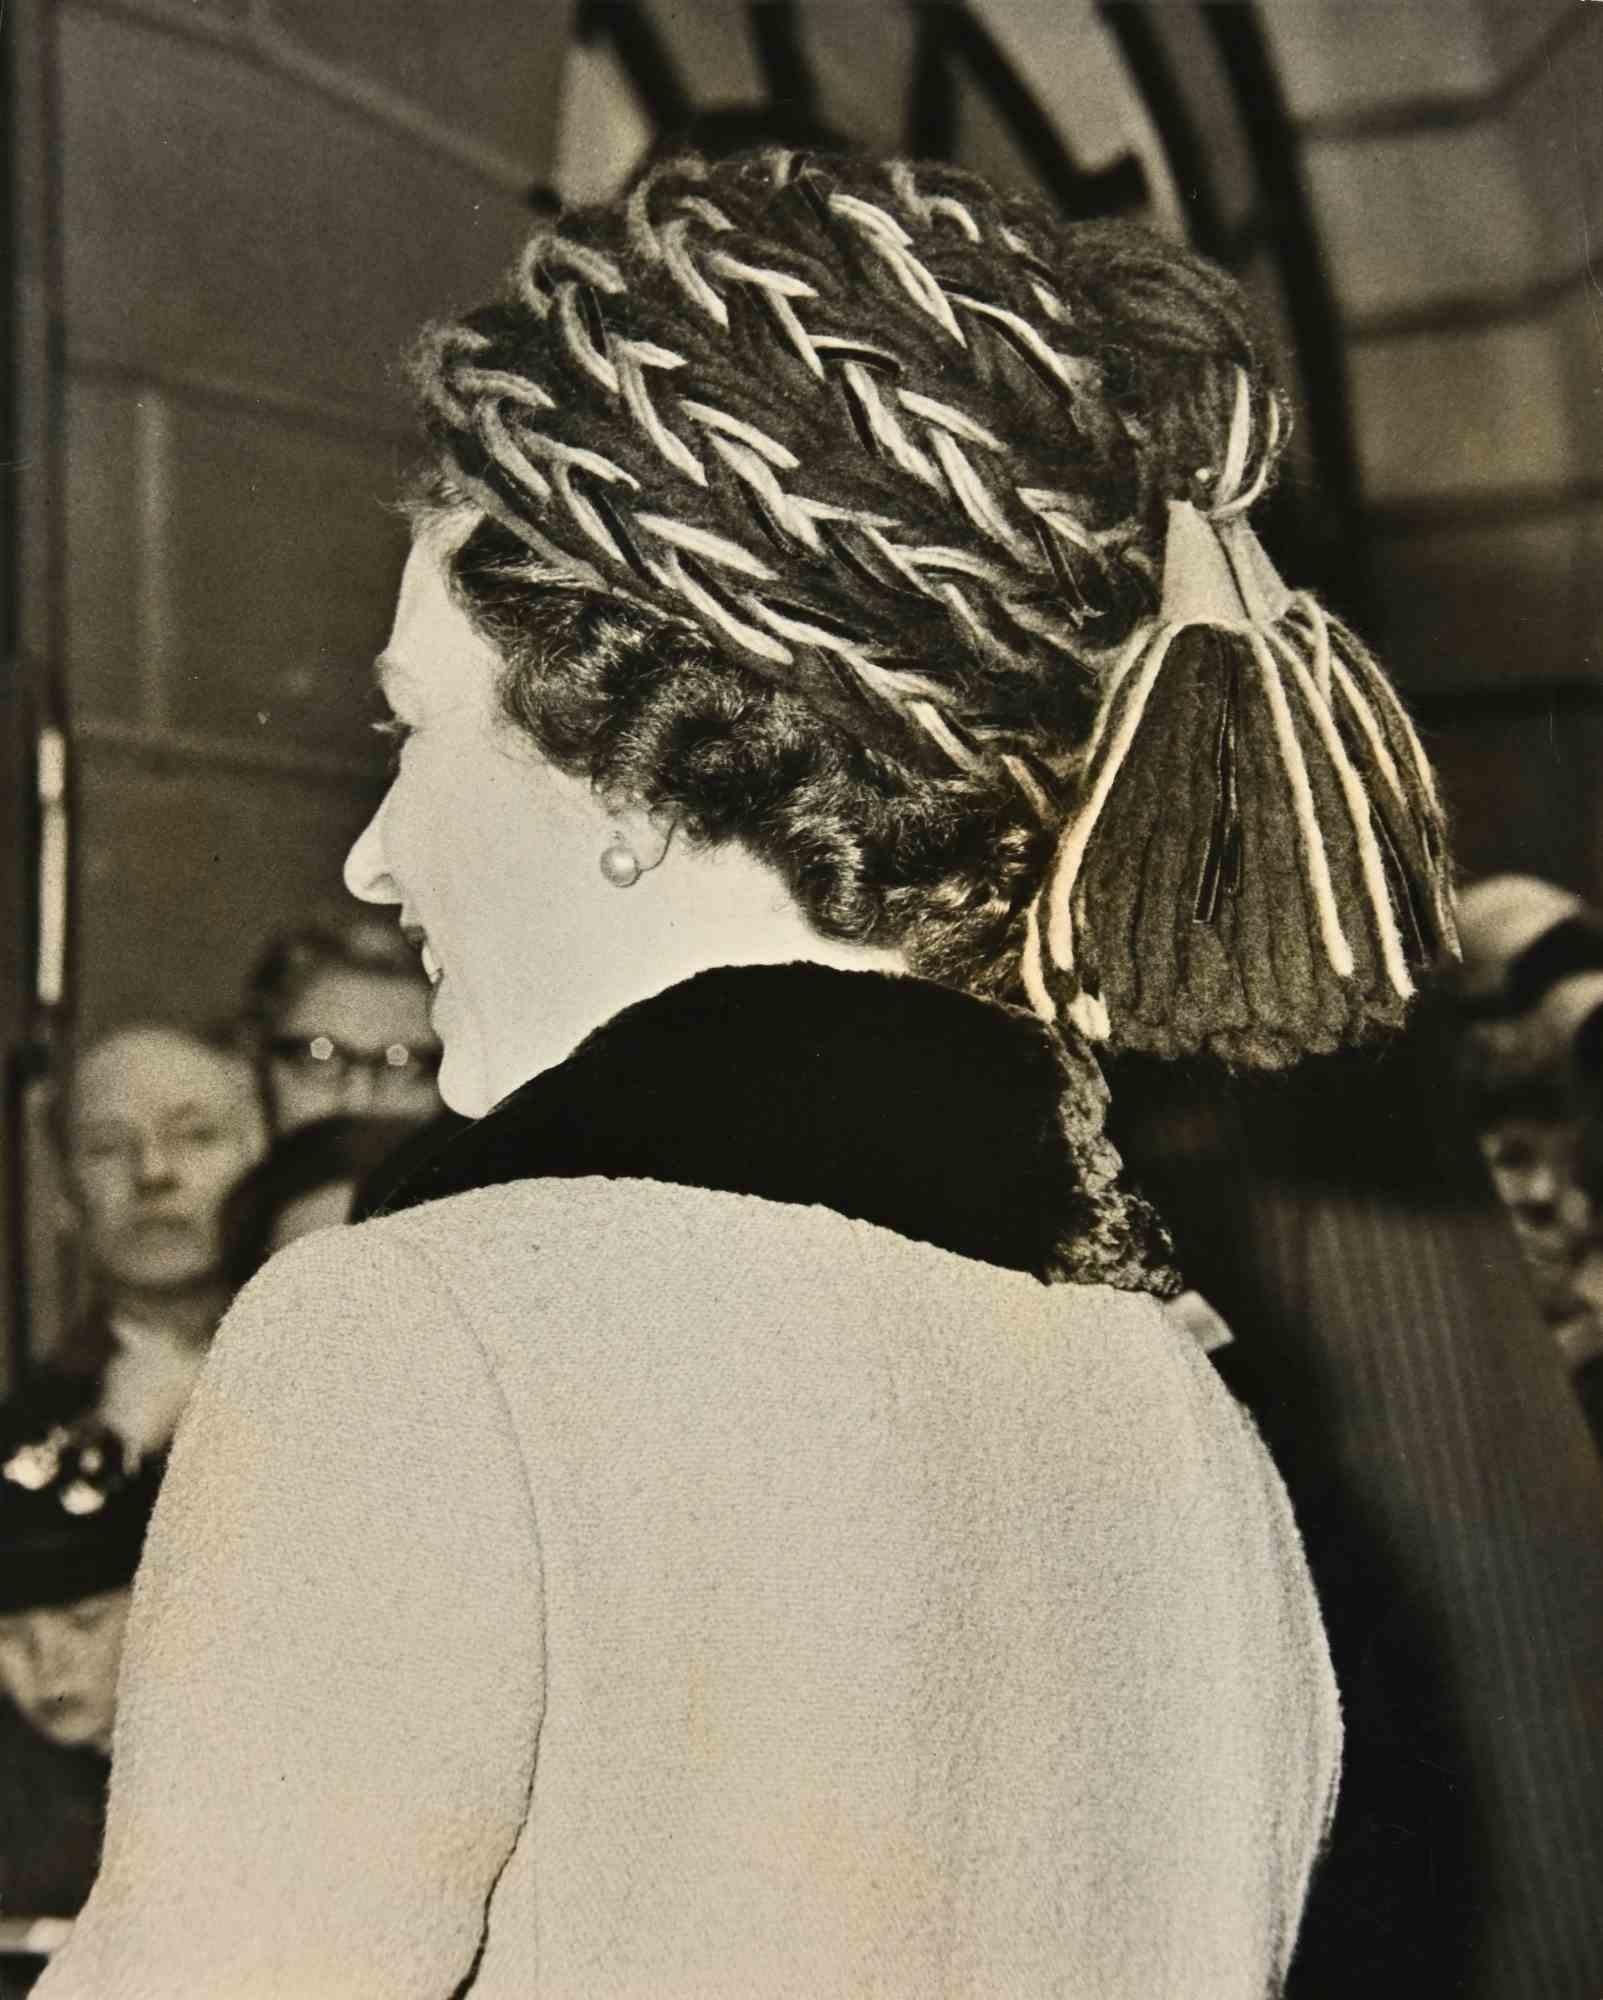 Unknown Figurative Photograph - Queen Elizabeth II Wears a Tassel - Photograph - 1963